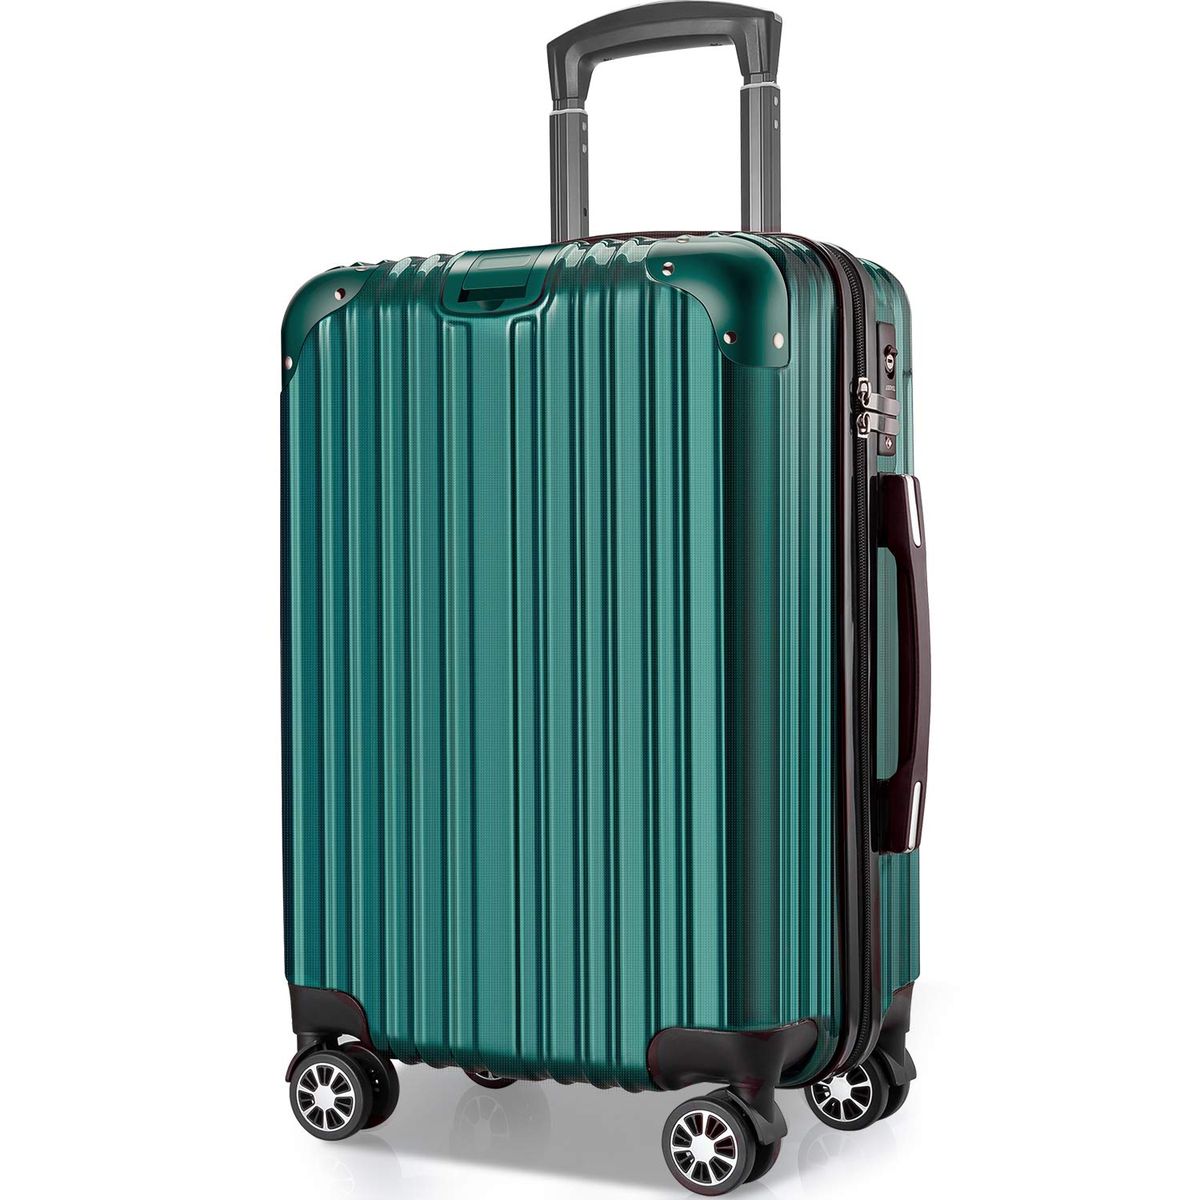 [VARNIC] スーツケース キャリーバッグ キャリーケース 機内持込 超軽量 大型 静音 ダブルキャスター 耐衝撃 360度回転 TSAローク搭載 ファスナー式 旅行 ビジネス 出張 (M サイズ(65L), 緑)